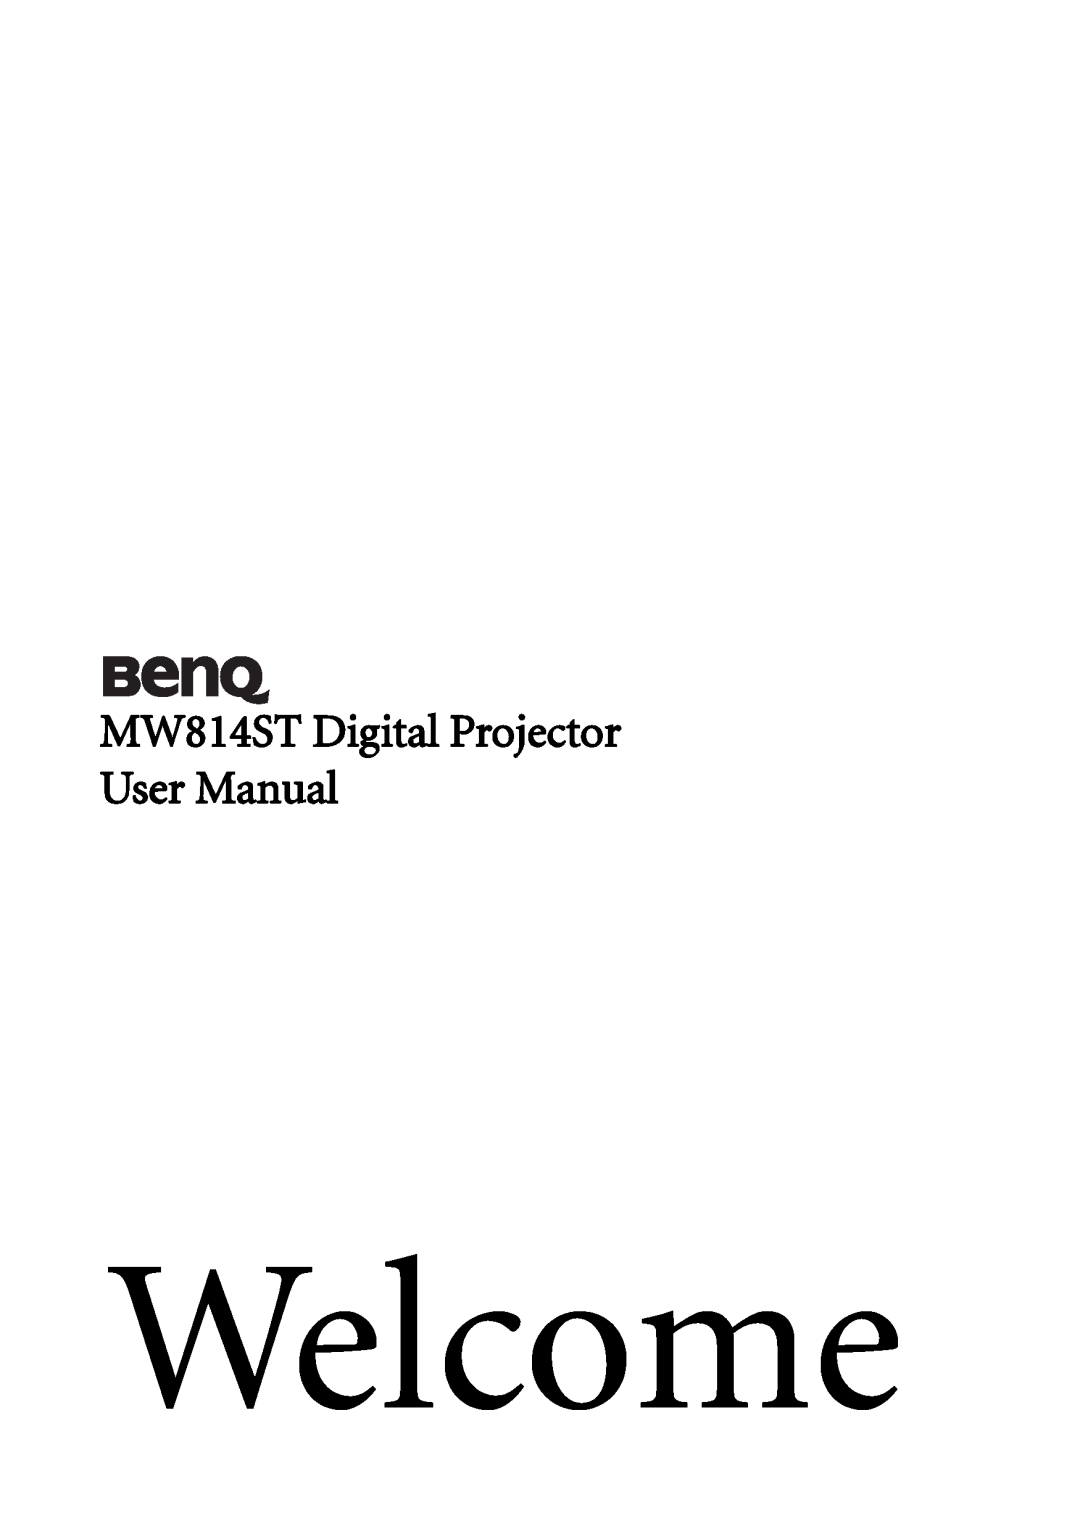 BenQ mw814st user manual MW814ST Digital Projector User Manual, Welcome 